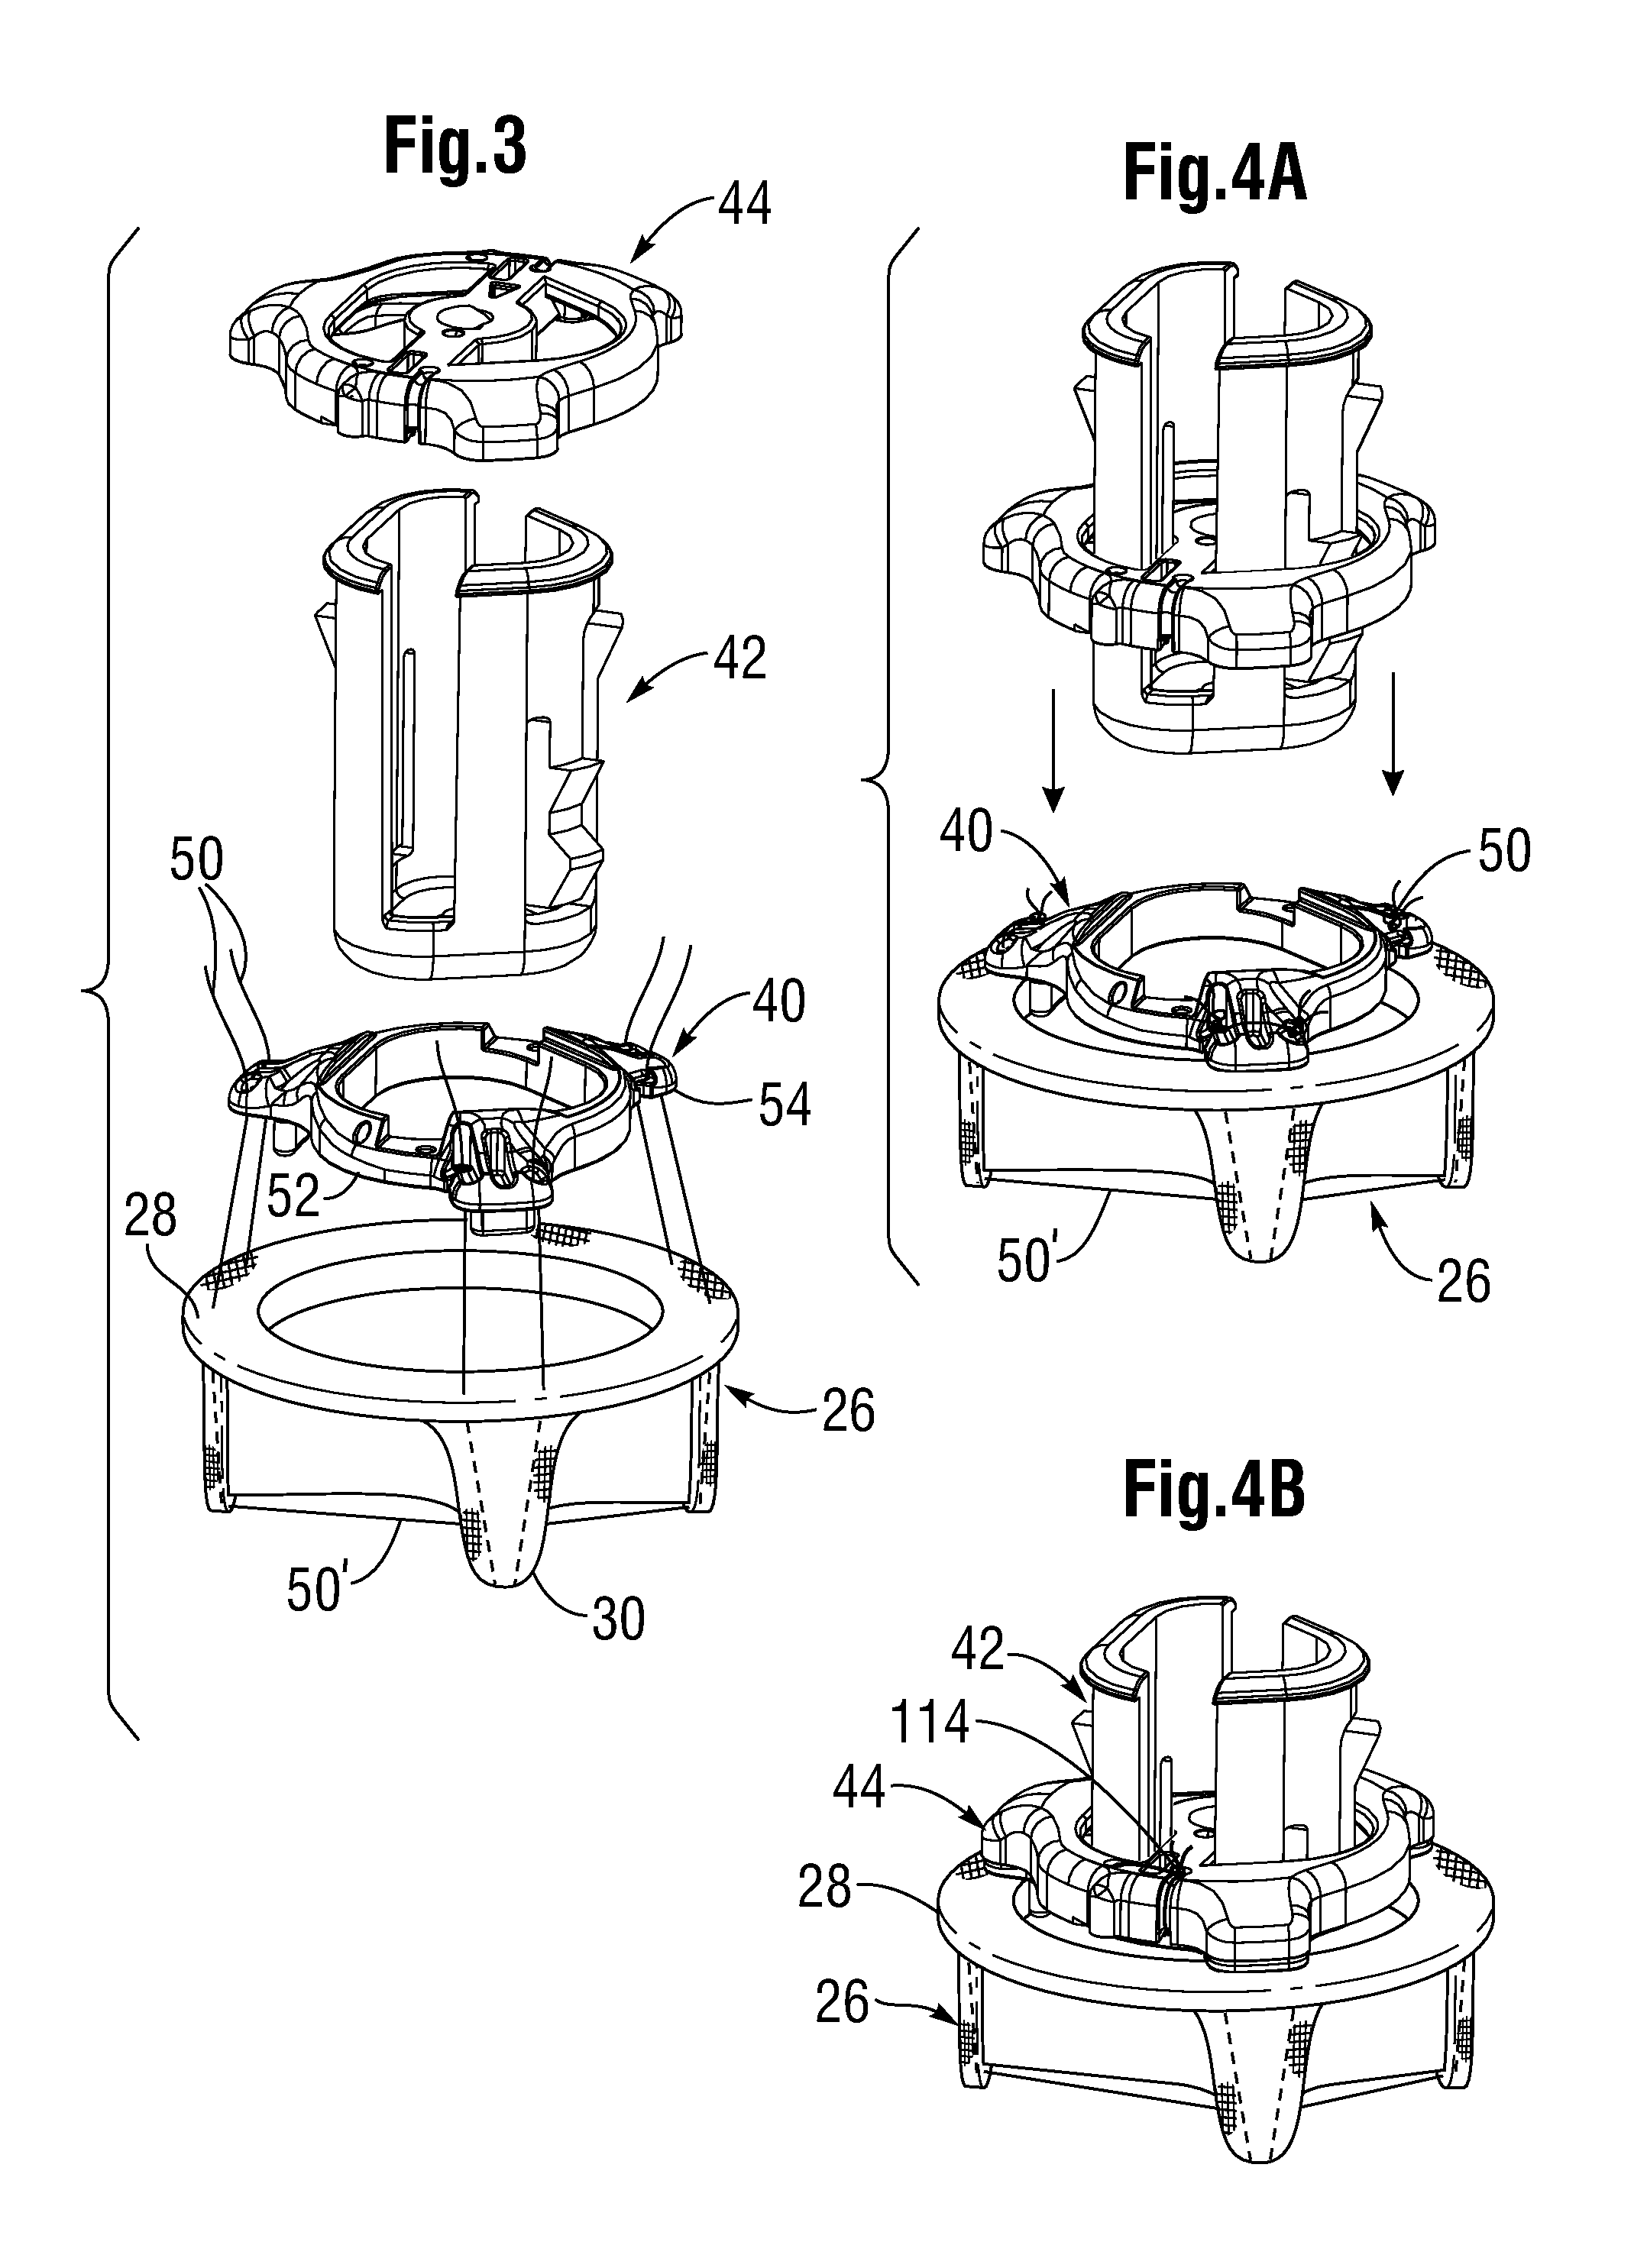 Mitral heart valve holder and storage system